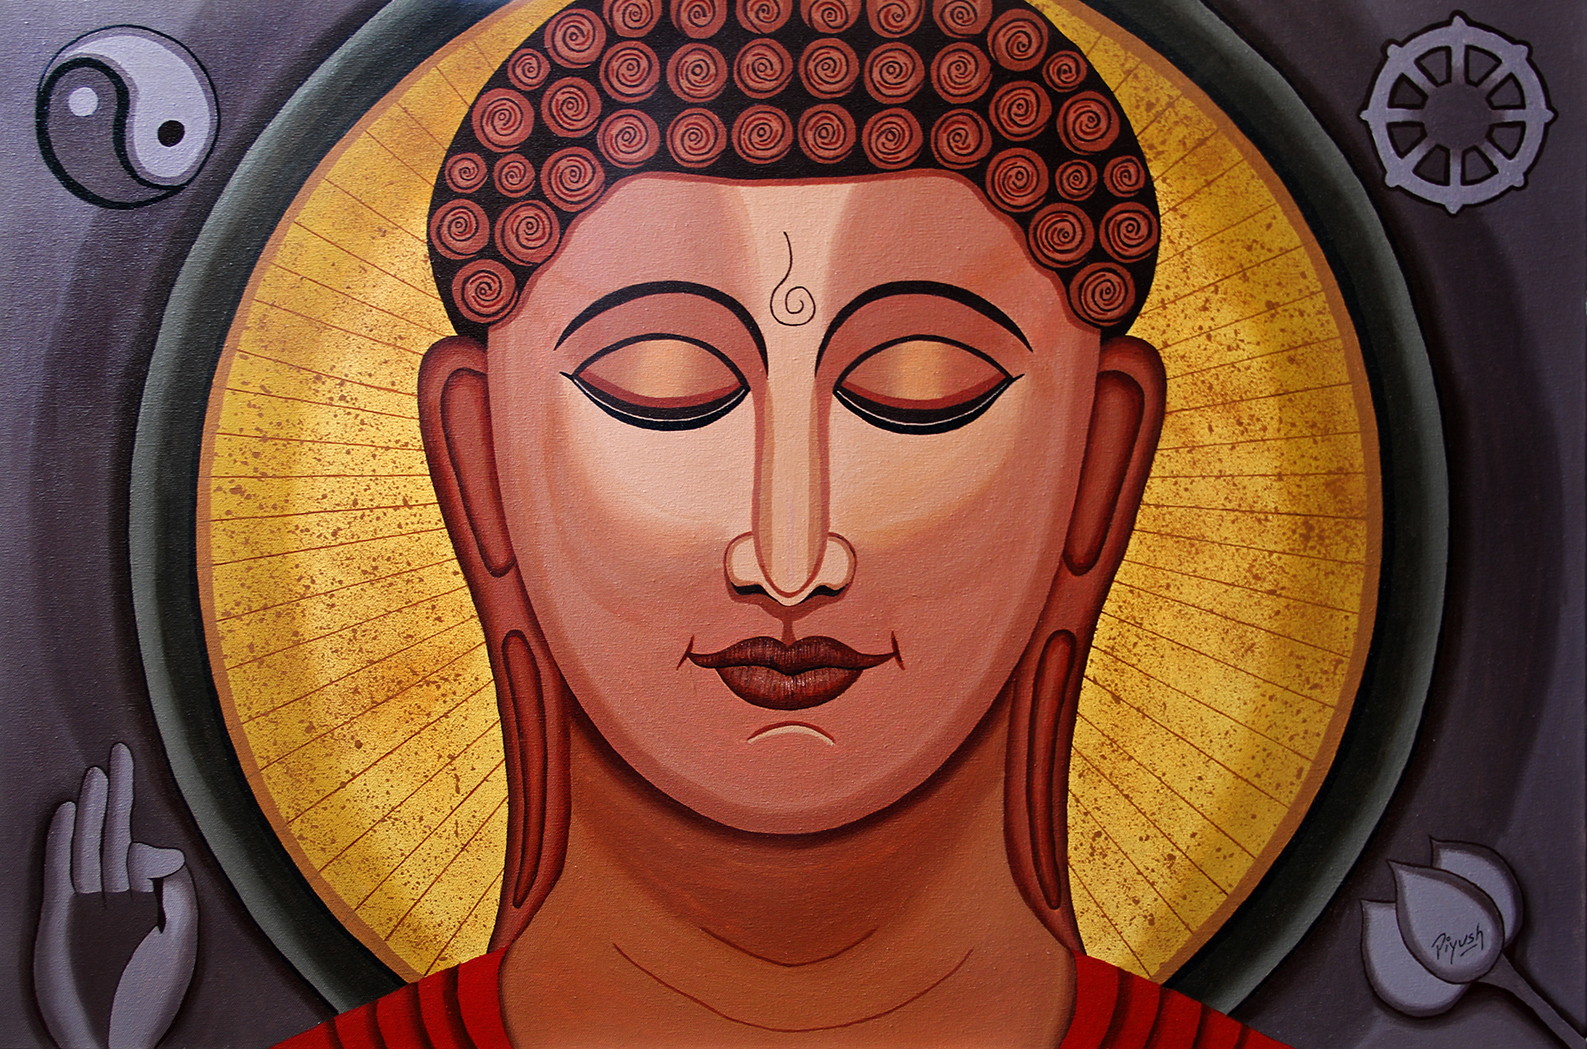 Eternal Buddha